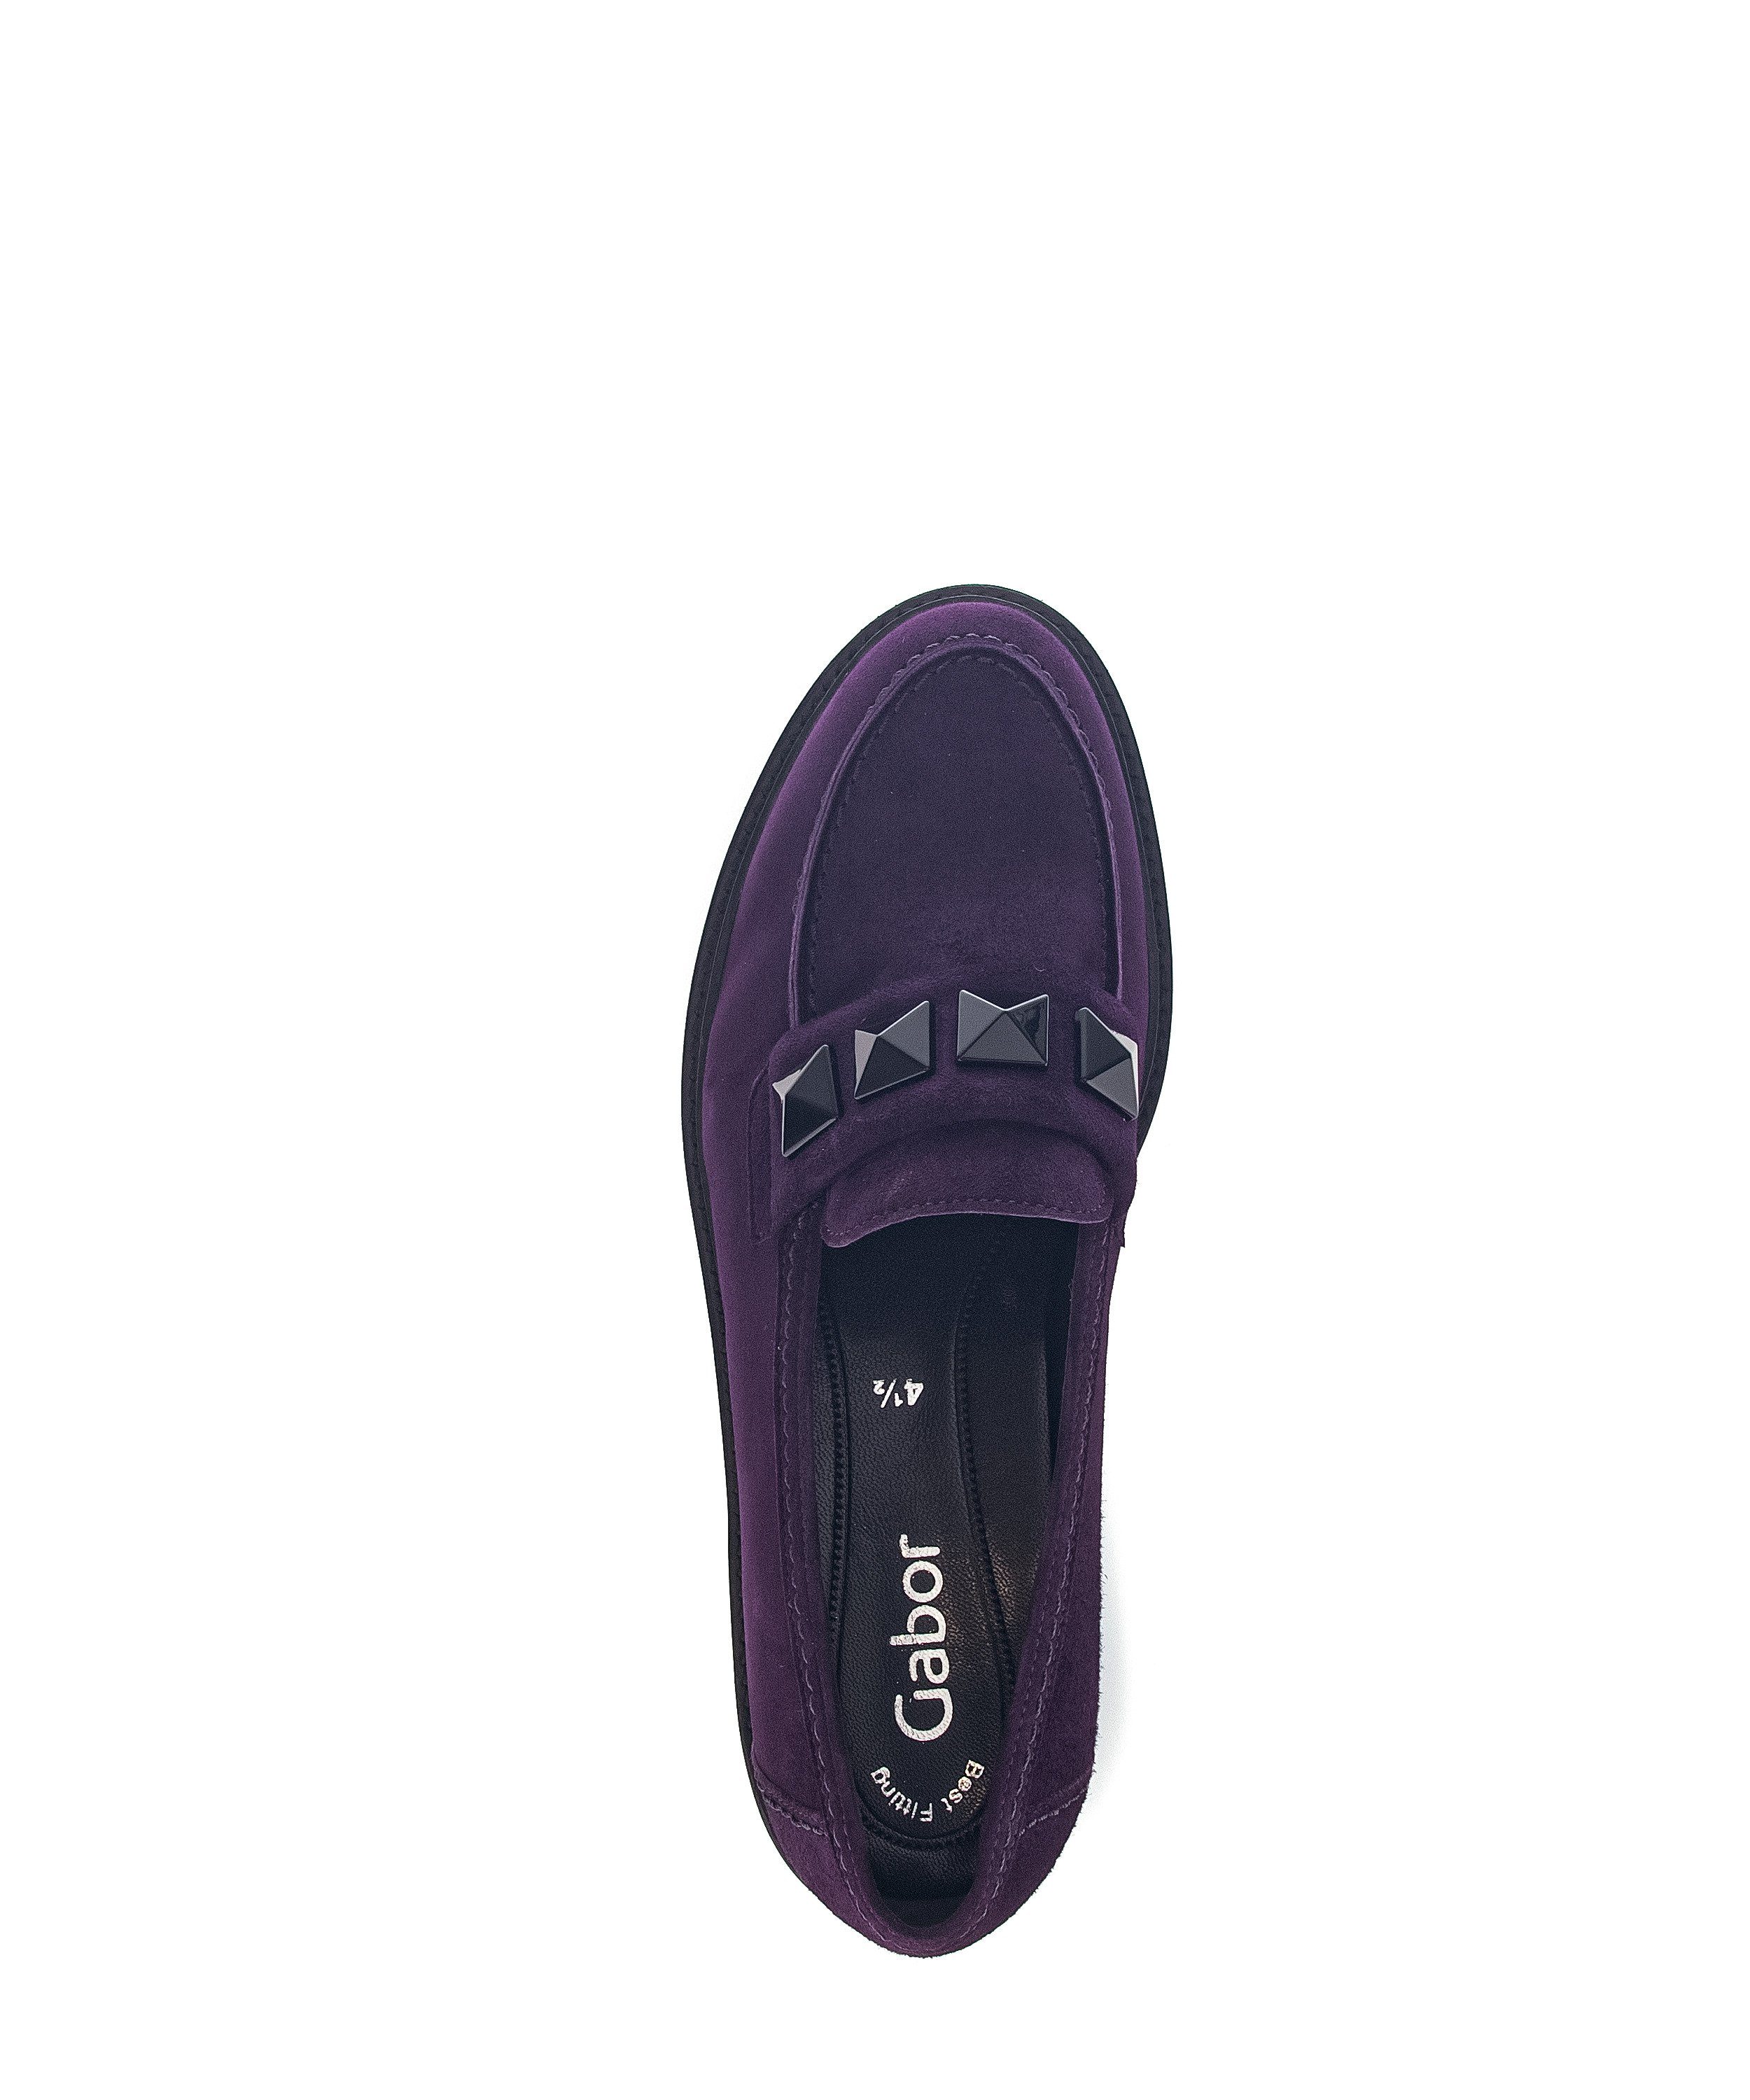 Lila (purple) Slipper Gabor